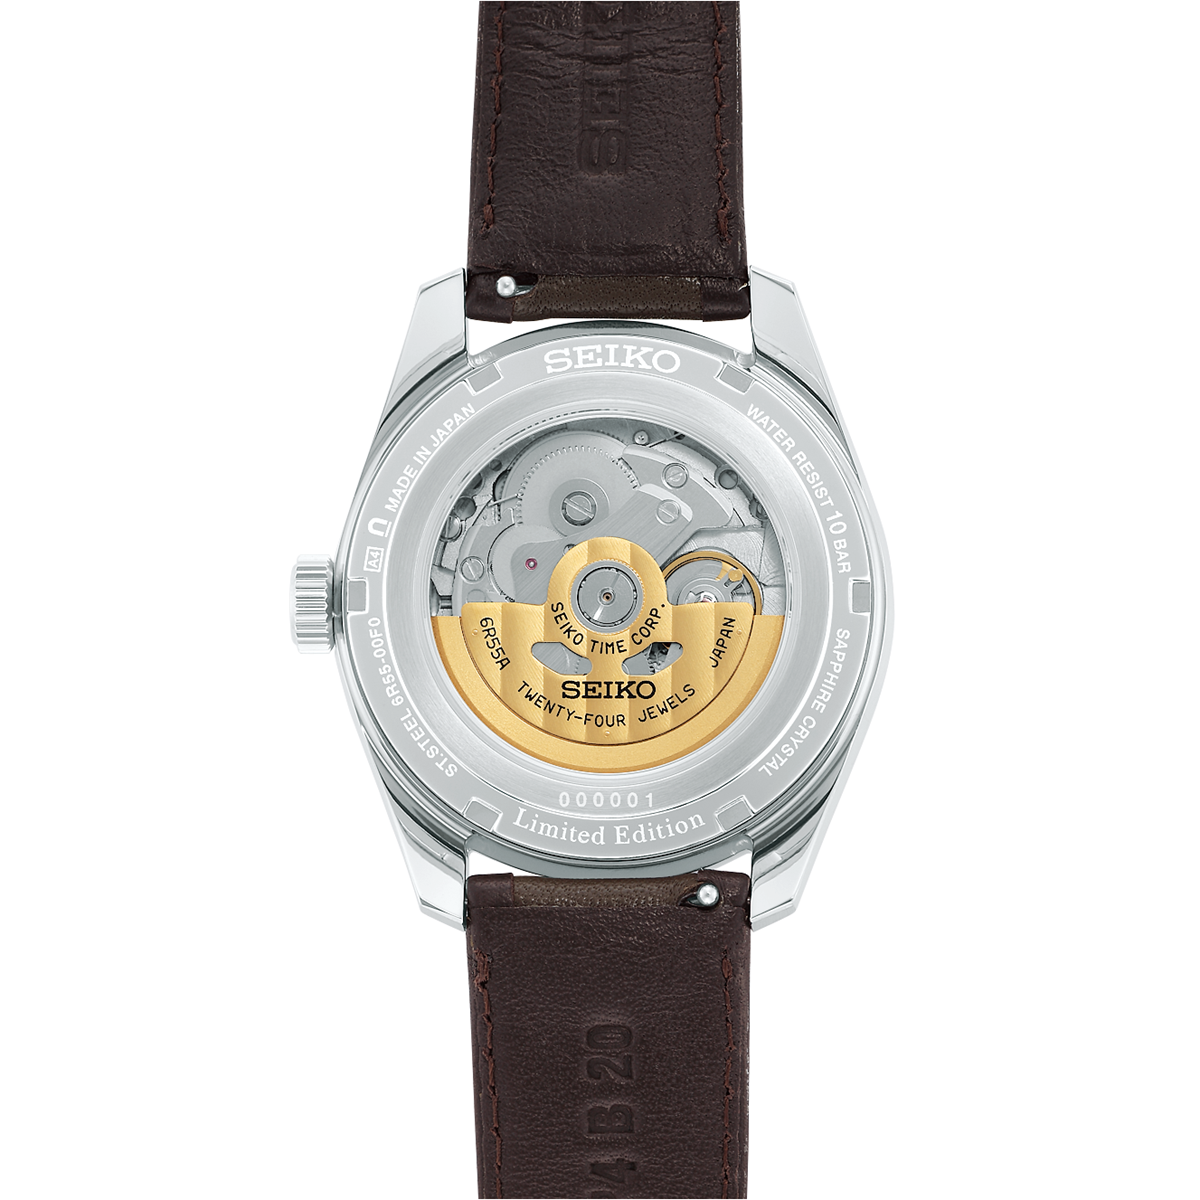 Seiko Presage 'Sharp Edge' Automatic Watch White Textured Dial Limited Edition SPB413J1